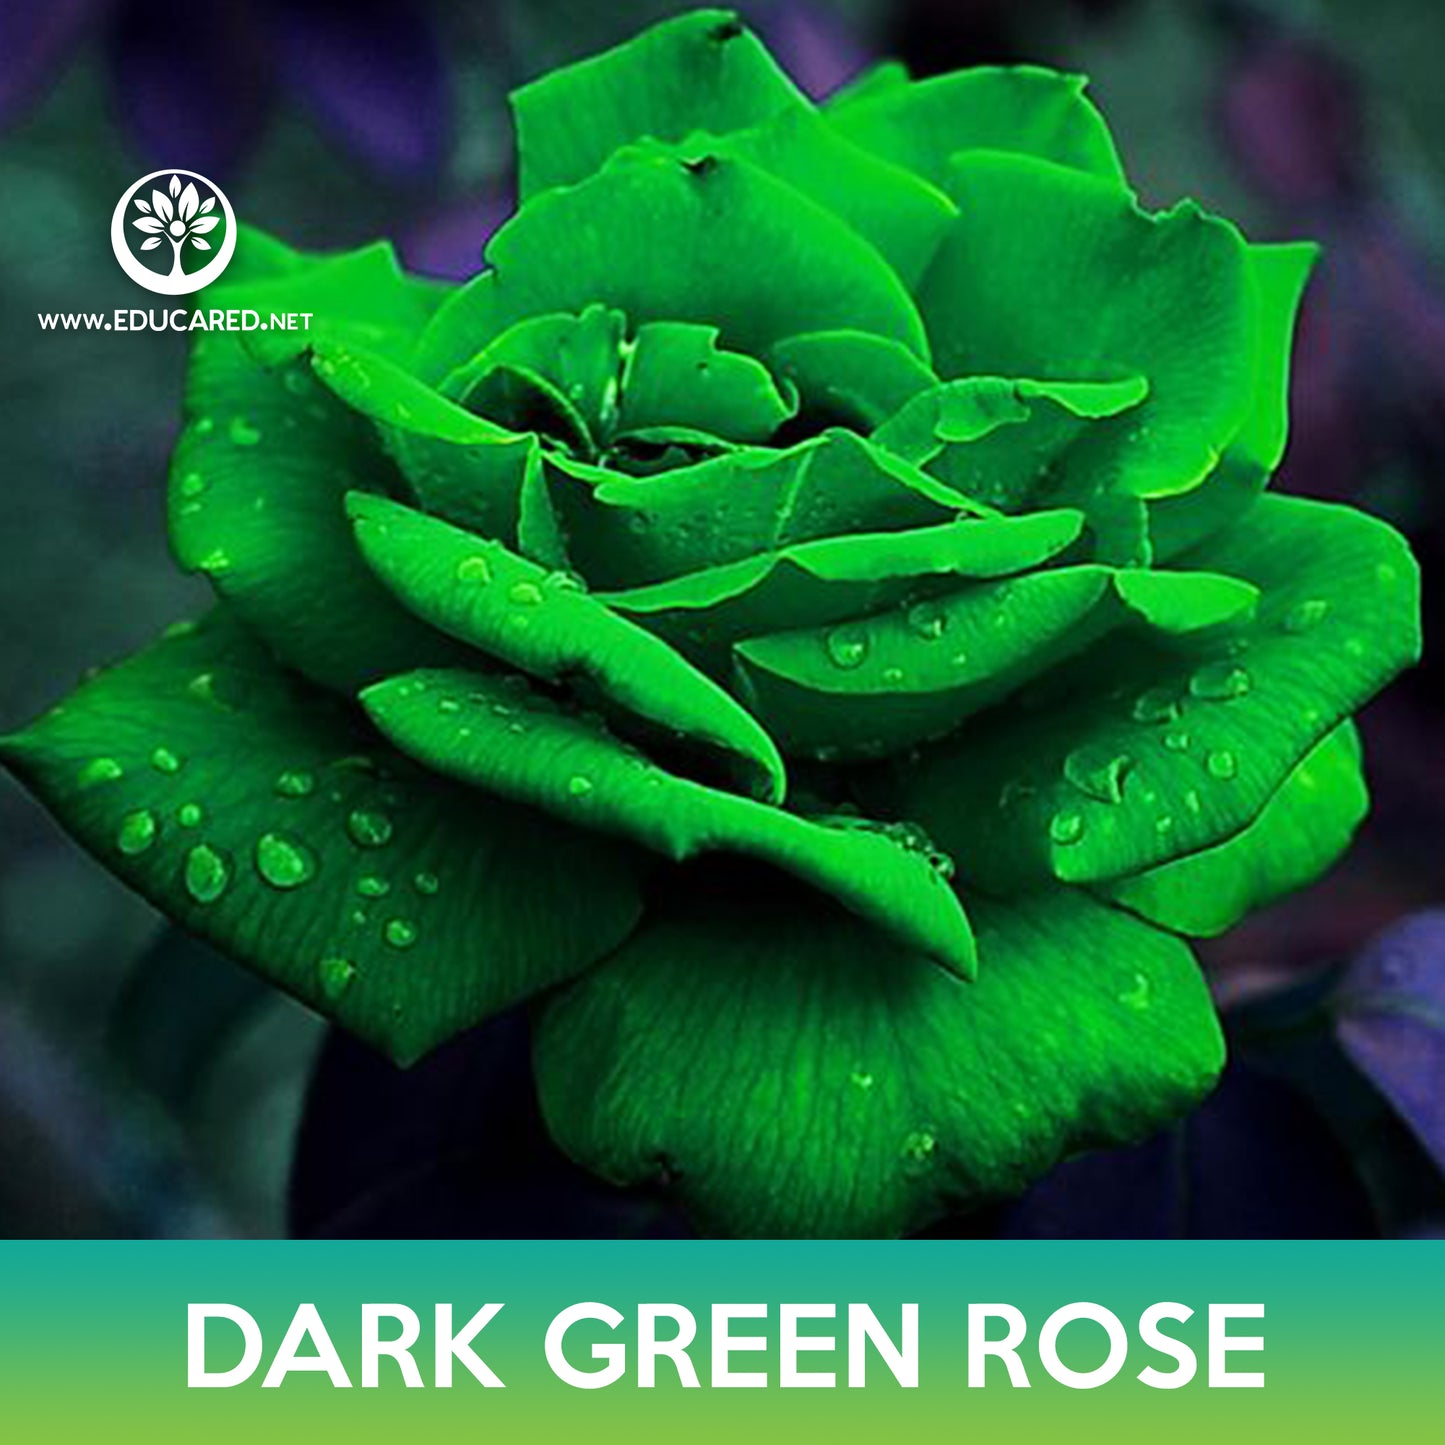 Dark Green Rose Seeds